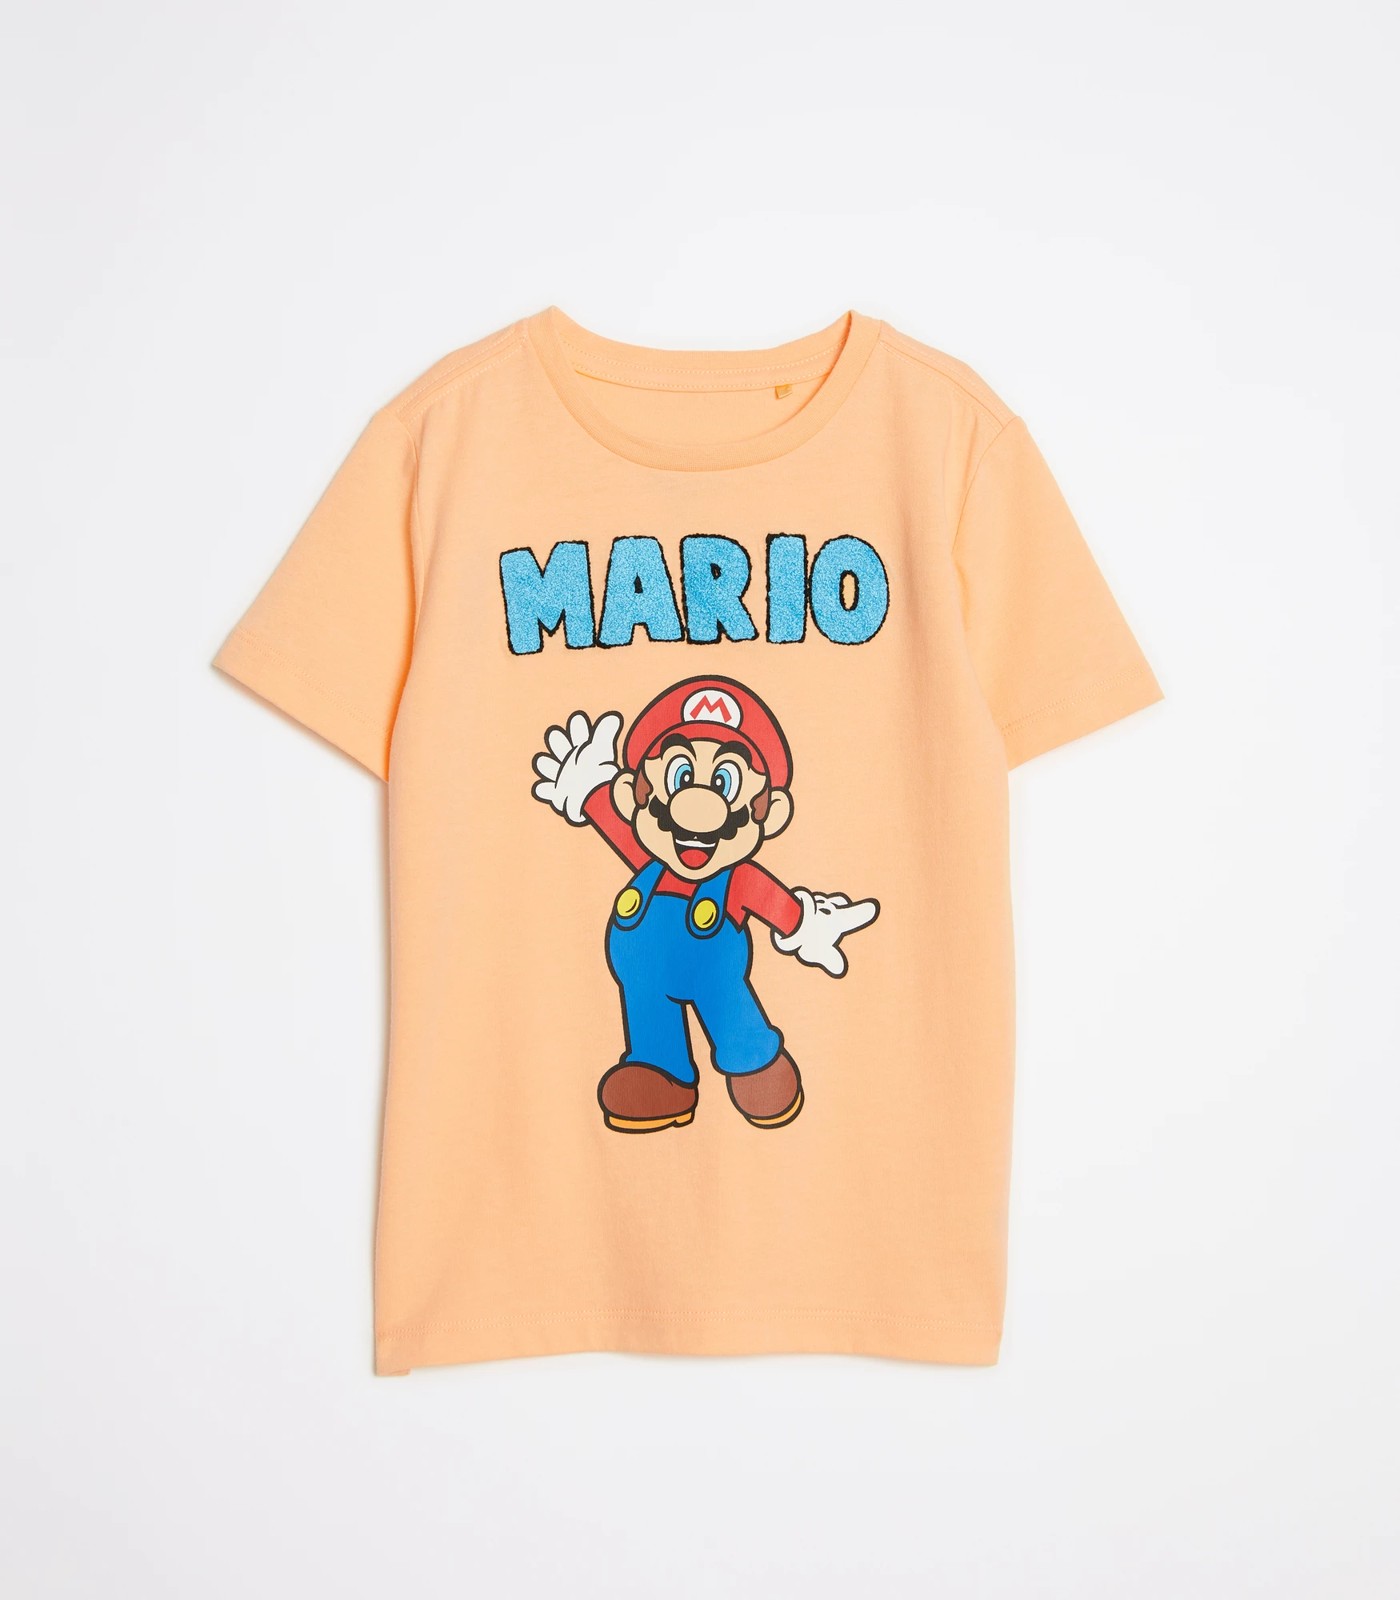 Super Mario T-shirt | Target Australia